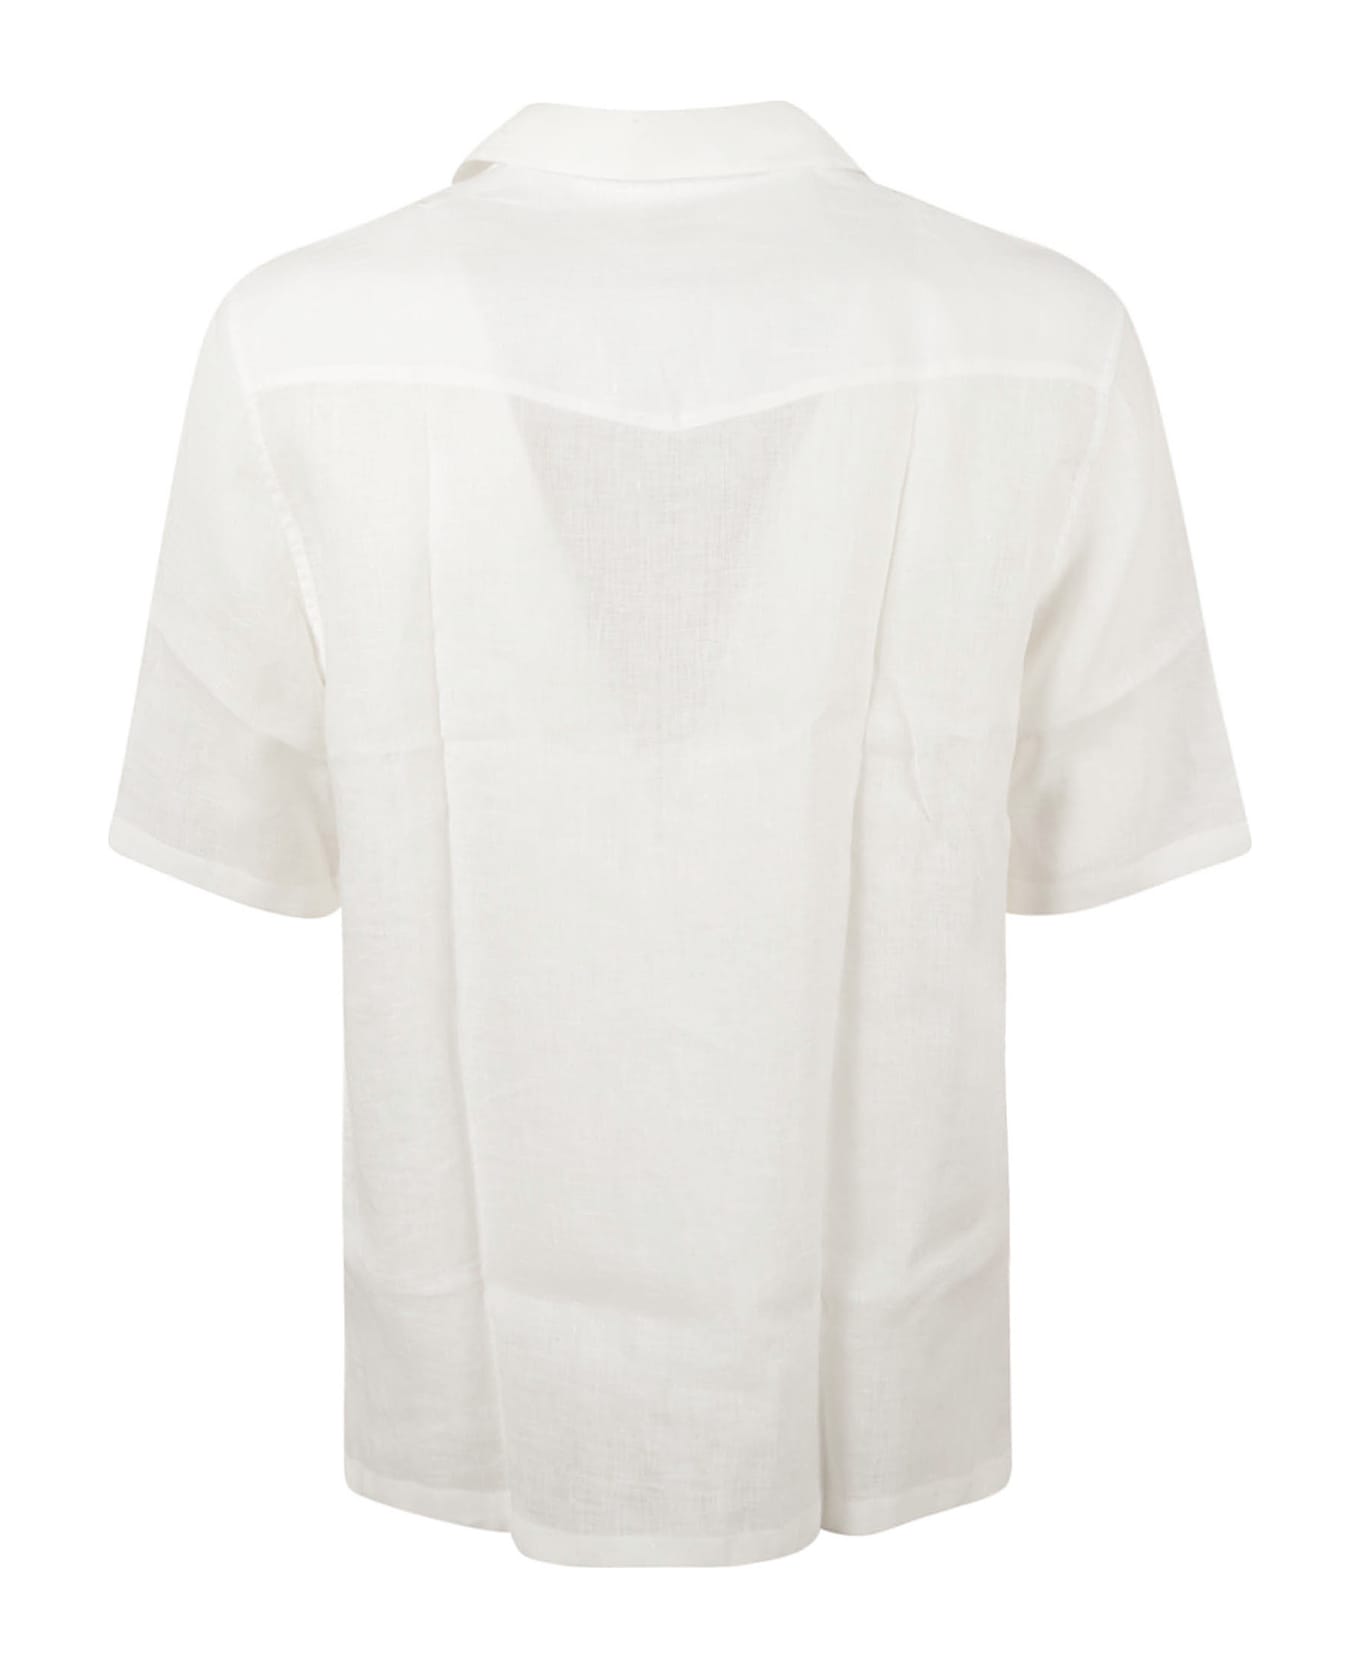 Brunello Cucinelli Regular Plain Shirt - White/Natural シャツ